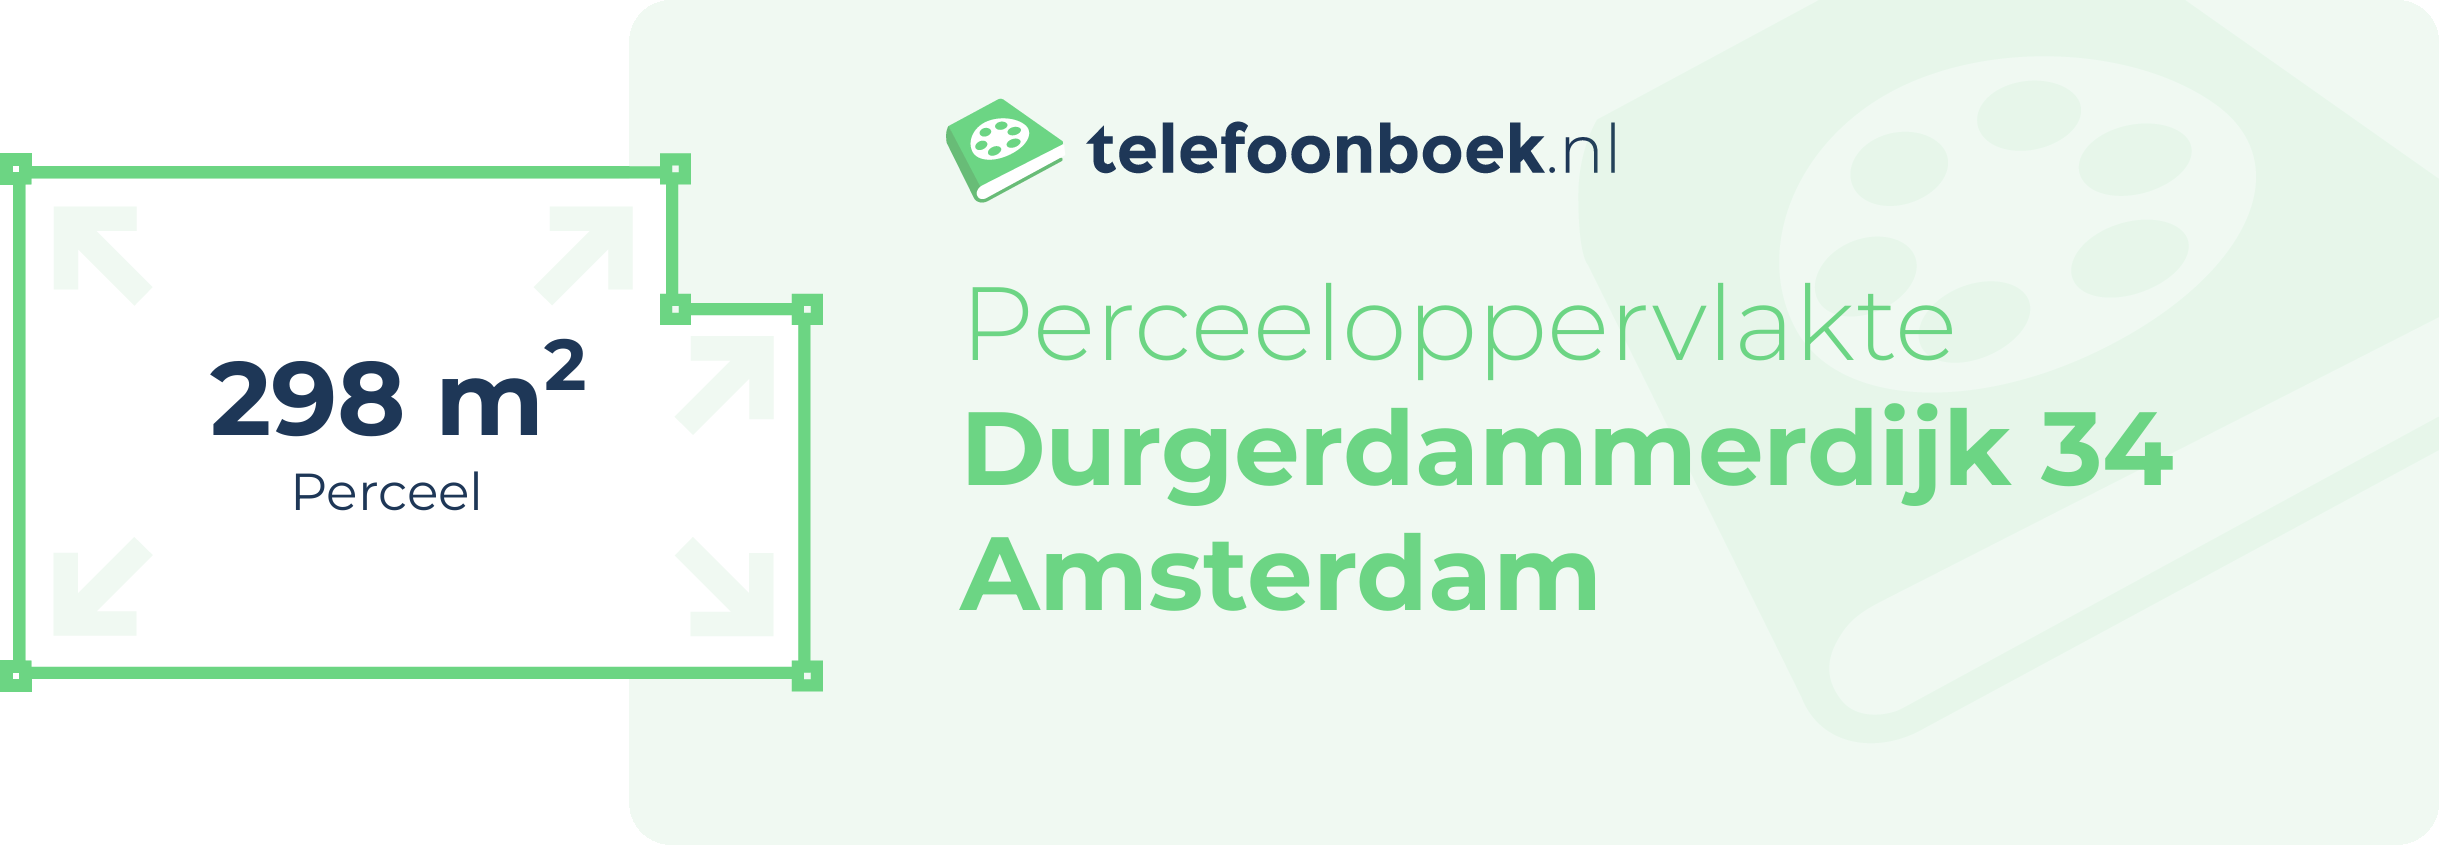 Perceeloppervlakte Durgerdammerdijk 34 Amsterdam